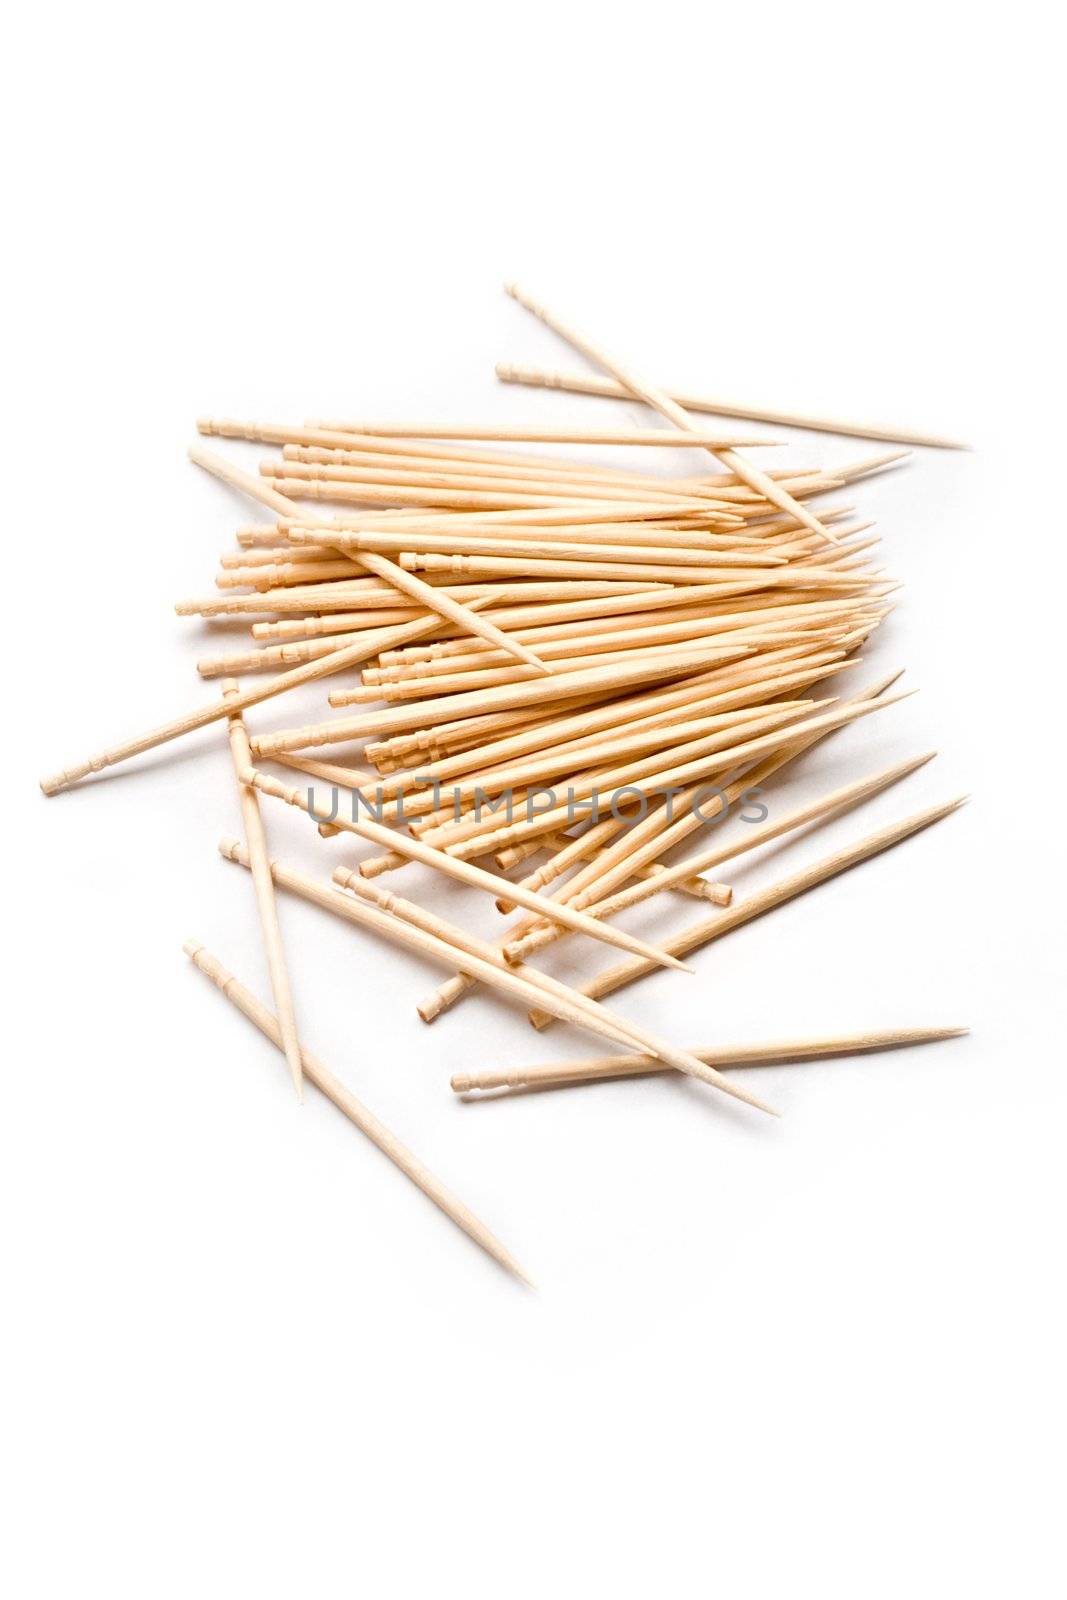 Toothpicks isolated on white